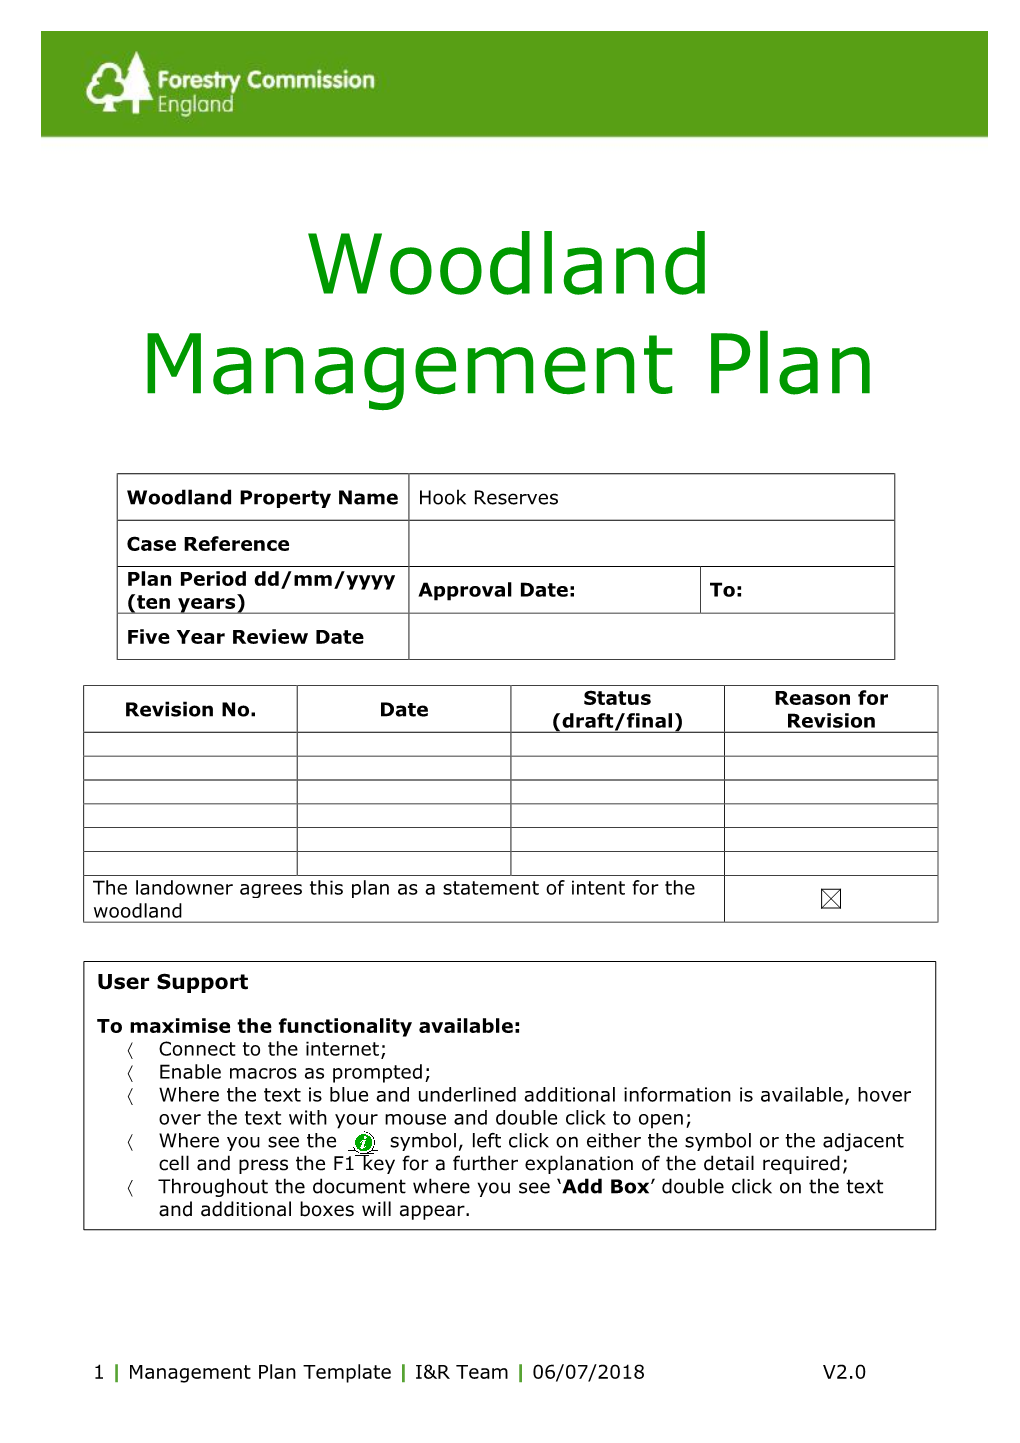 Woodland Management Plan